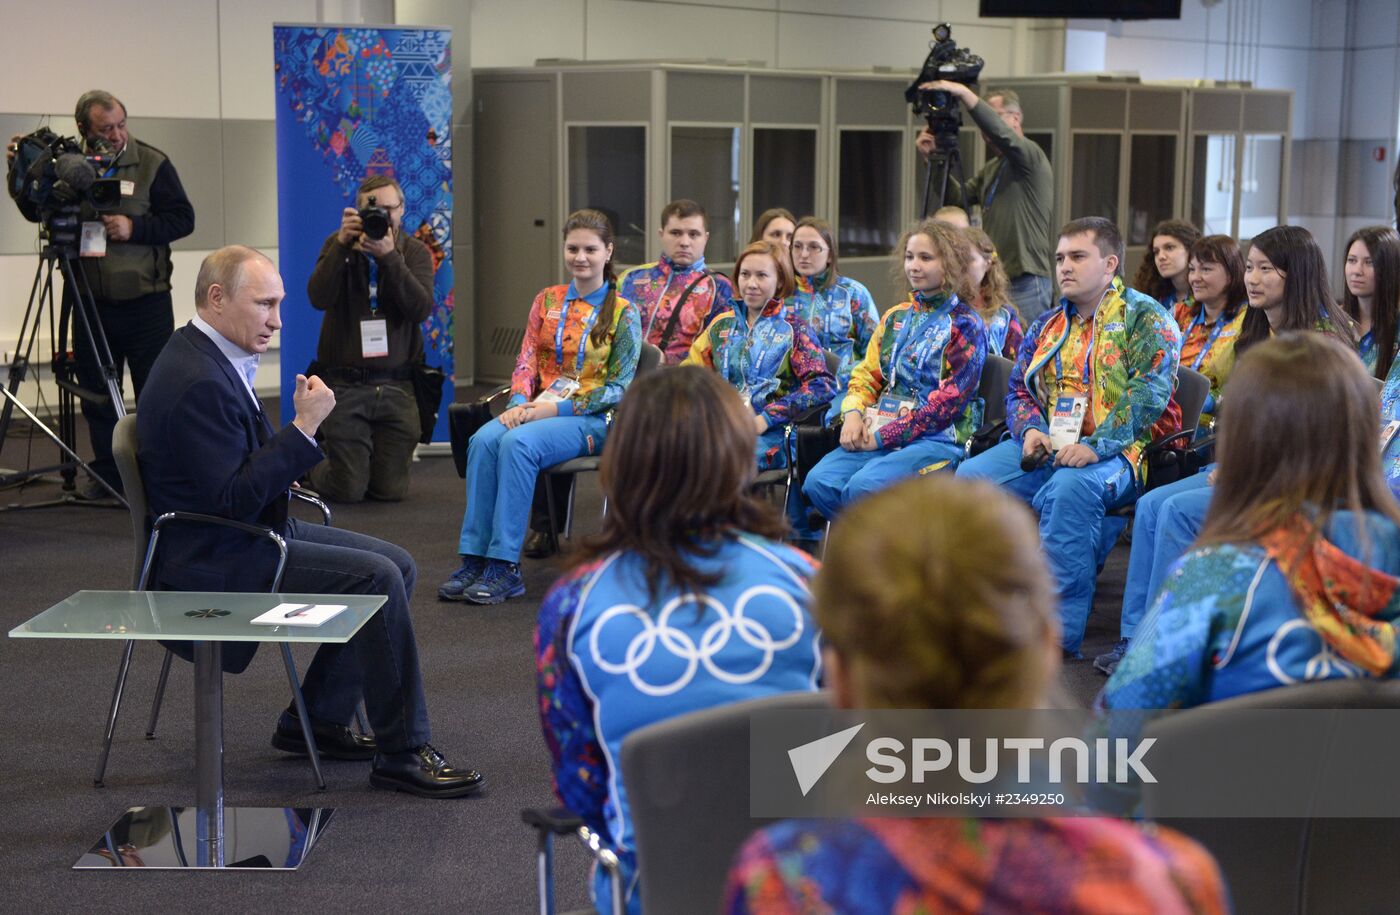 Vladimir Putin meets with Sochi 2014 Olympic volunteers